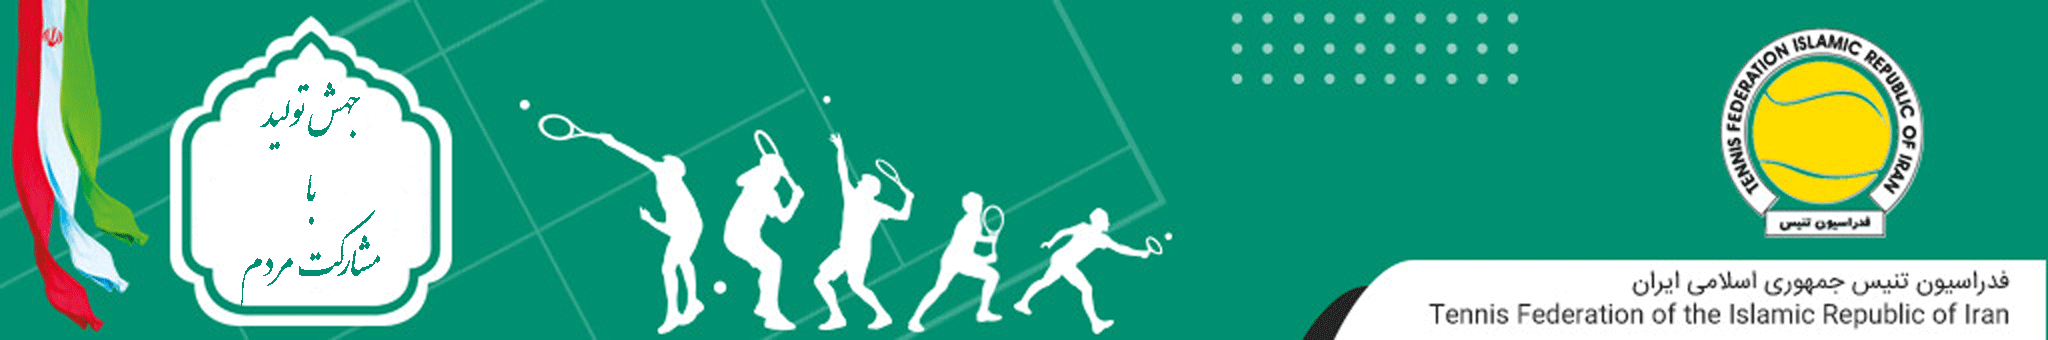 Iran Tennis Federation Islamic Republic Of Iran